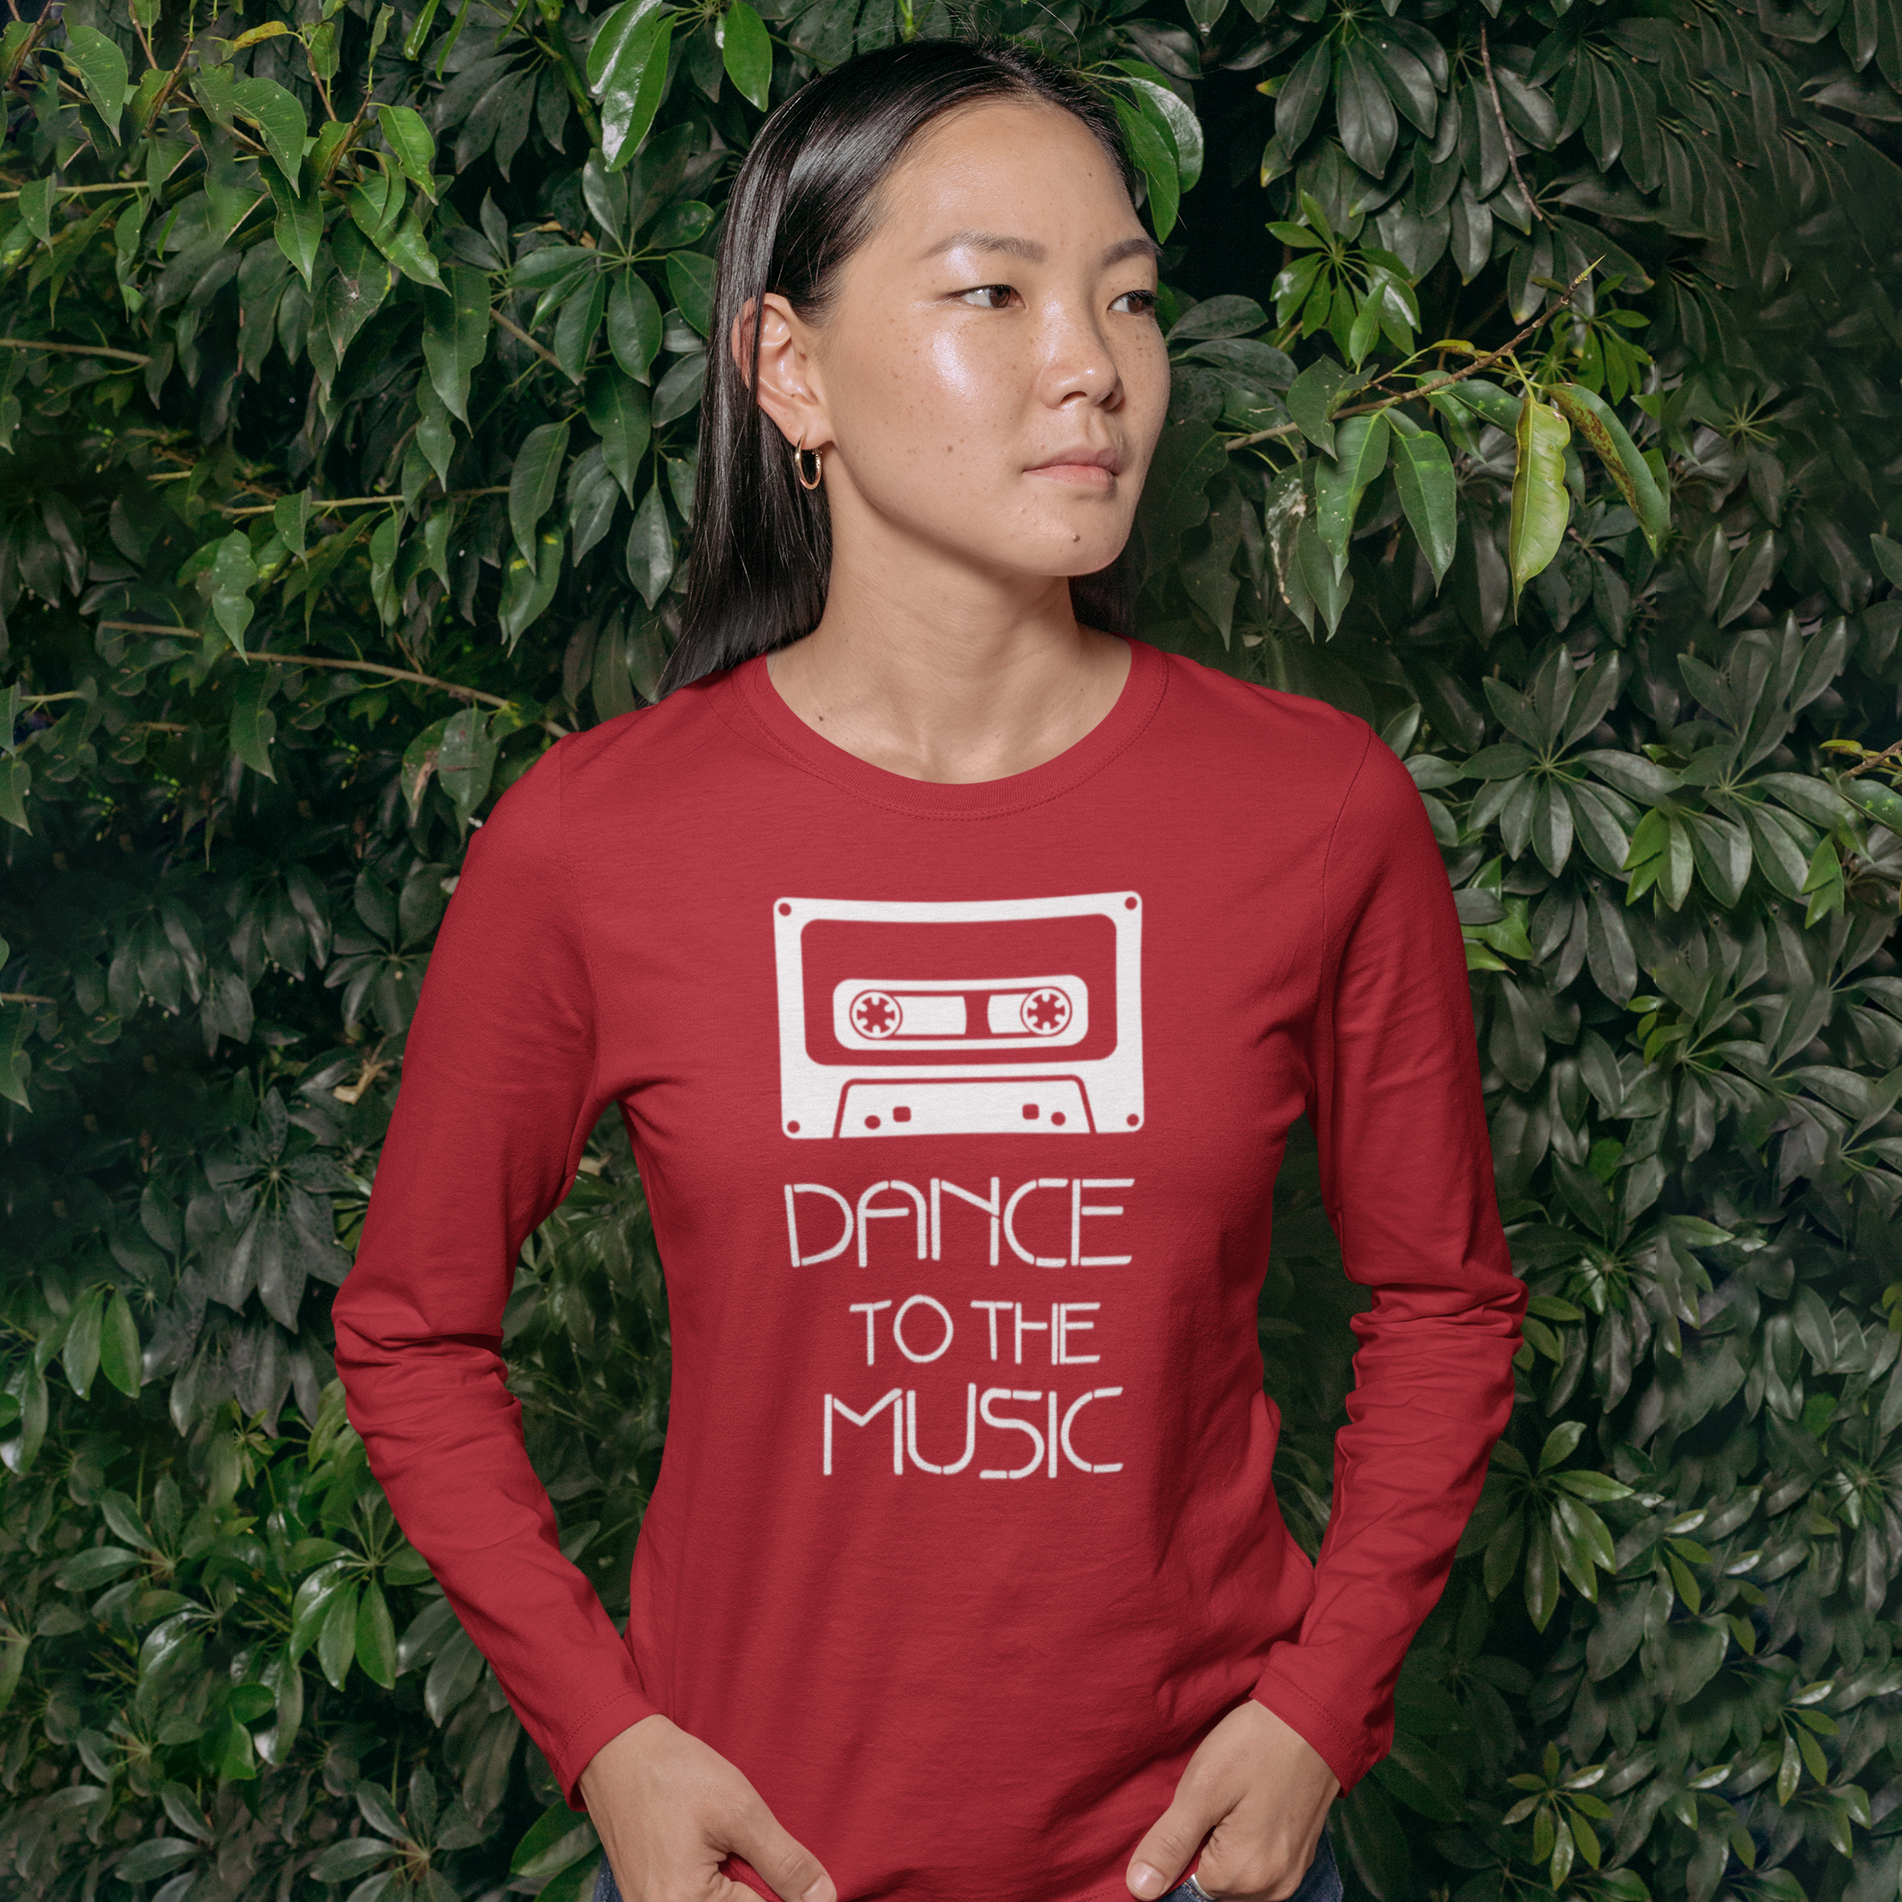 'Dance to the music' adult longsleeve shirt